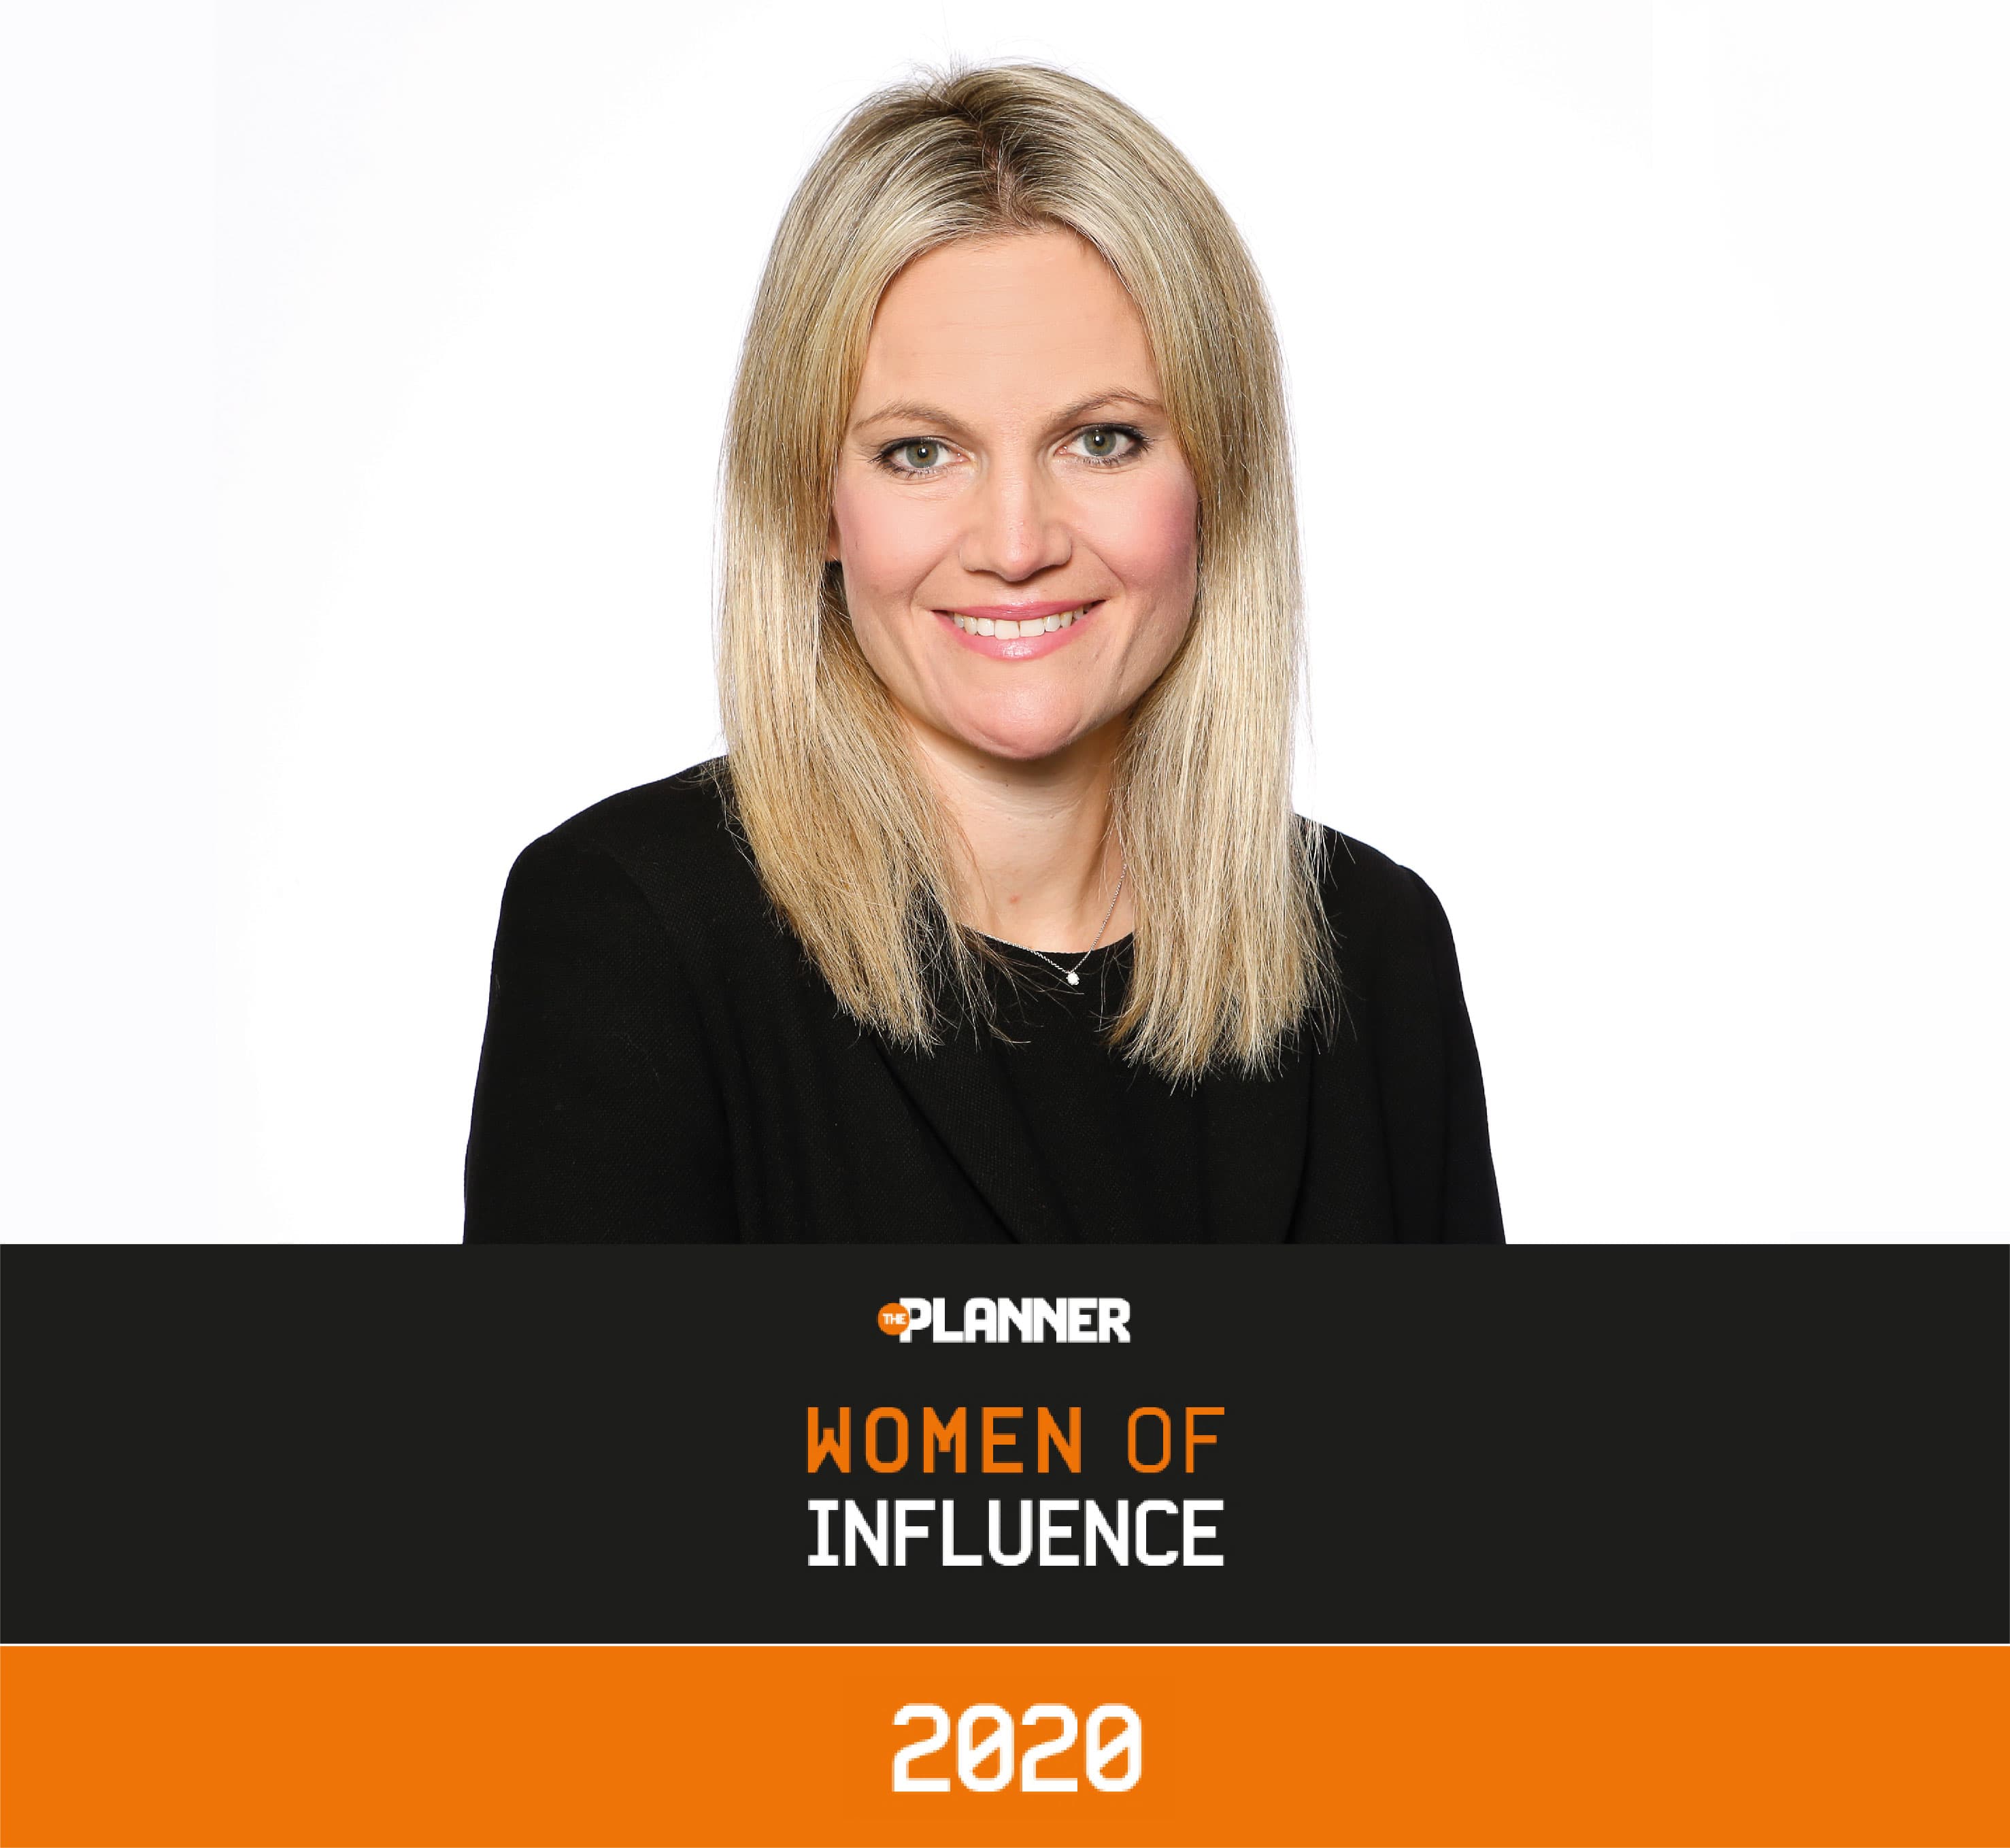 Sarah Reid makes Women of Influence 2020